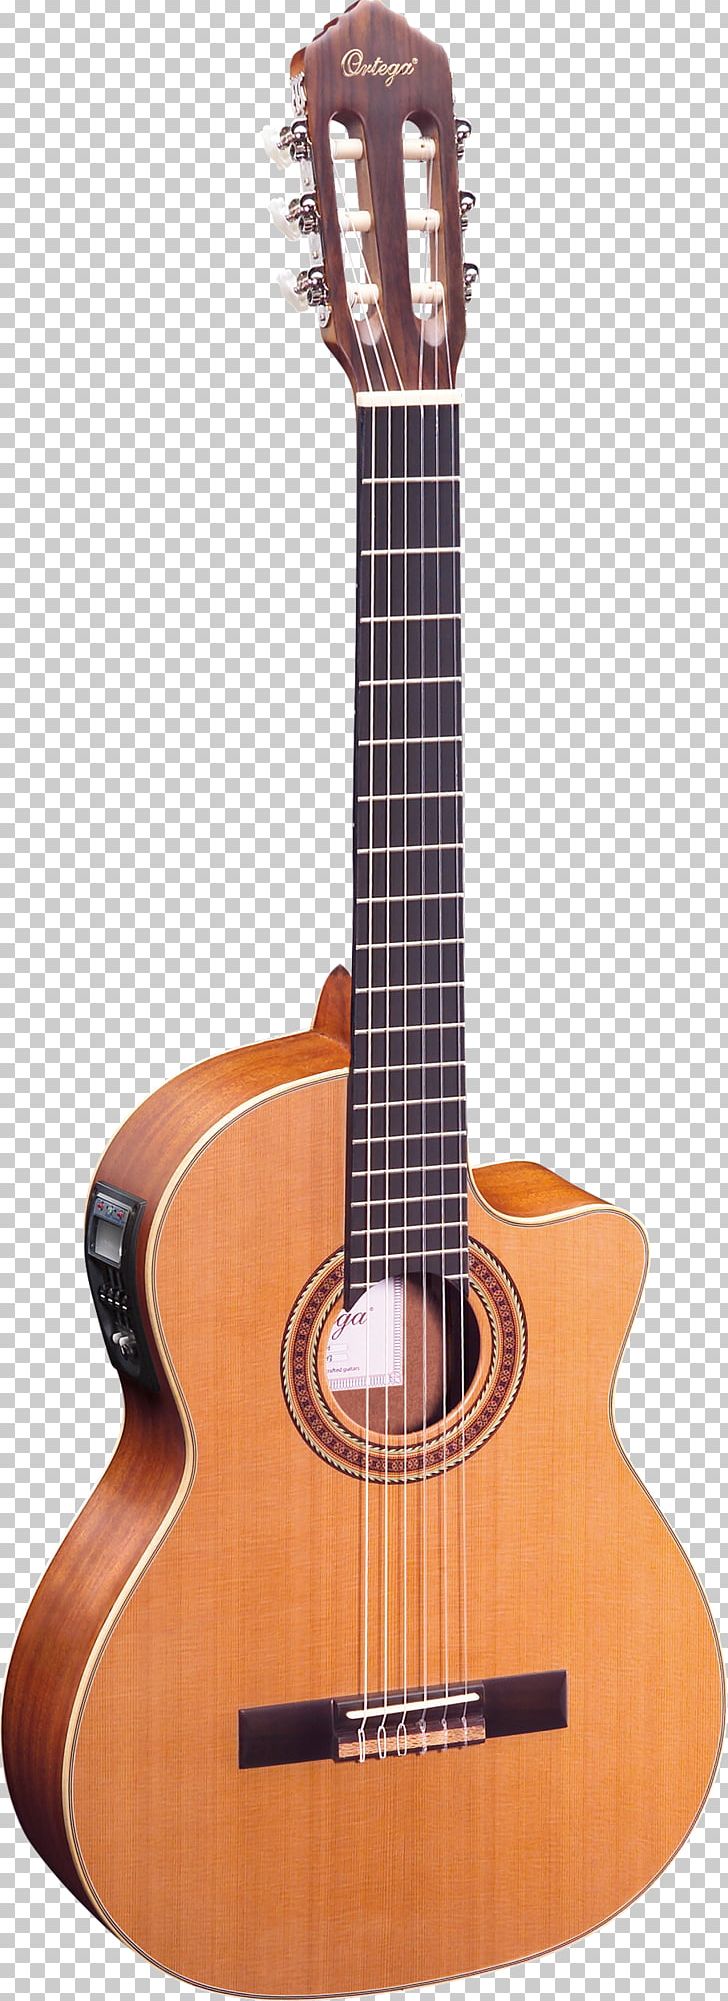 Fender Bullet Steel-string Acoustic Guitar Classical Guitar Acoustic-electric Guitar PNG, Clipart, Acoustic Electric Guitar, Amancio Ortega, Classical Guitar, Cuatro, Cutaway Free PNG Download